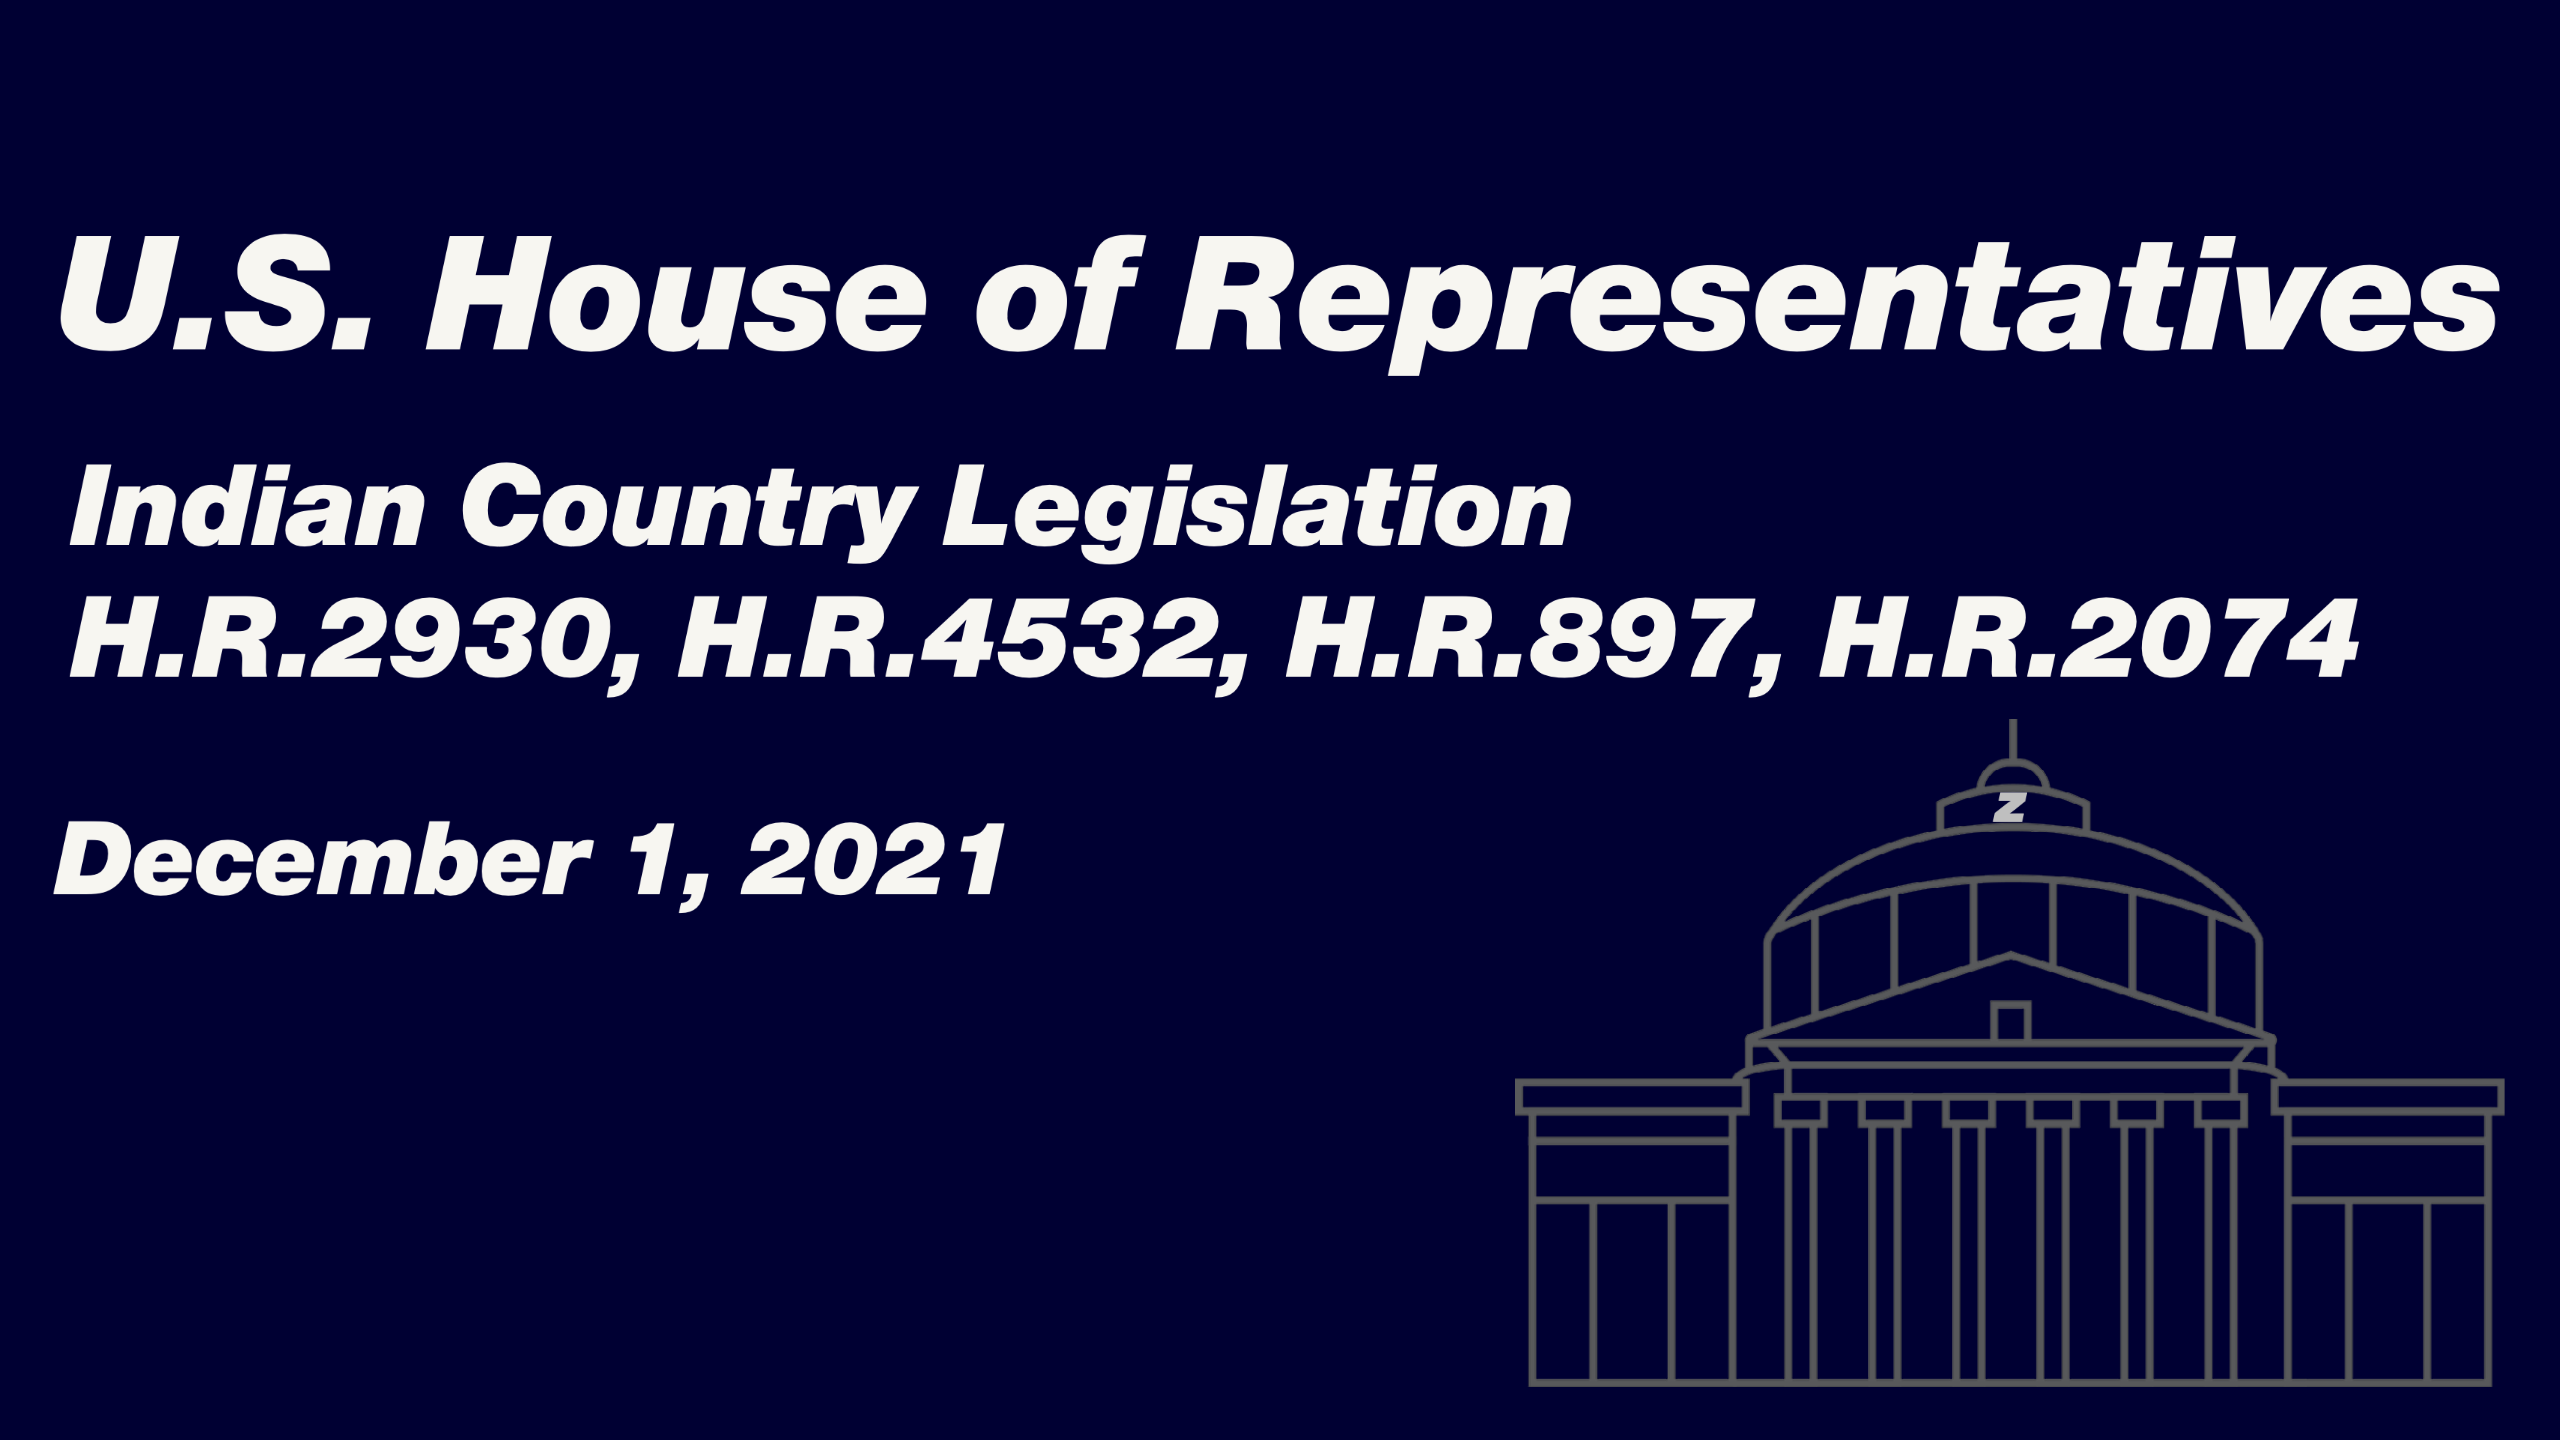 Indian Country Legislation - U.S. House of Representatives - December 1, 2021